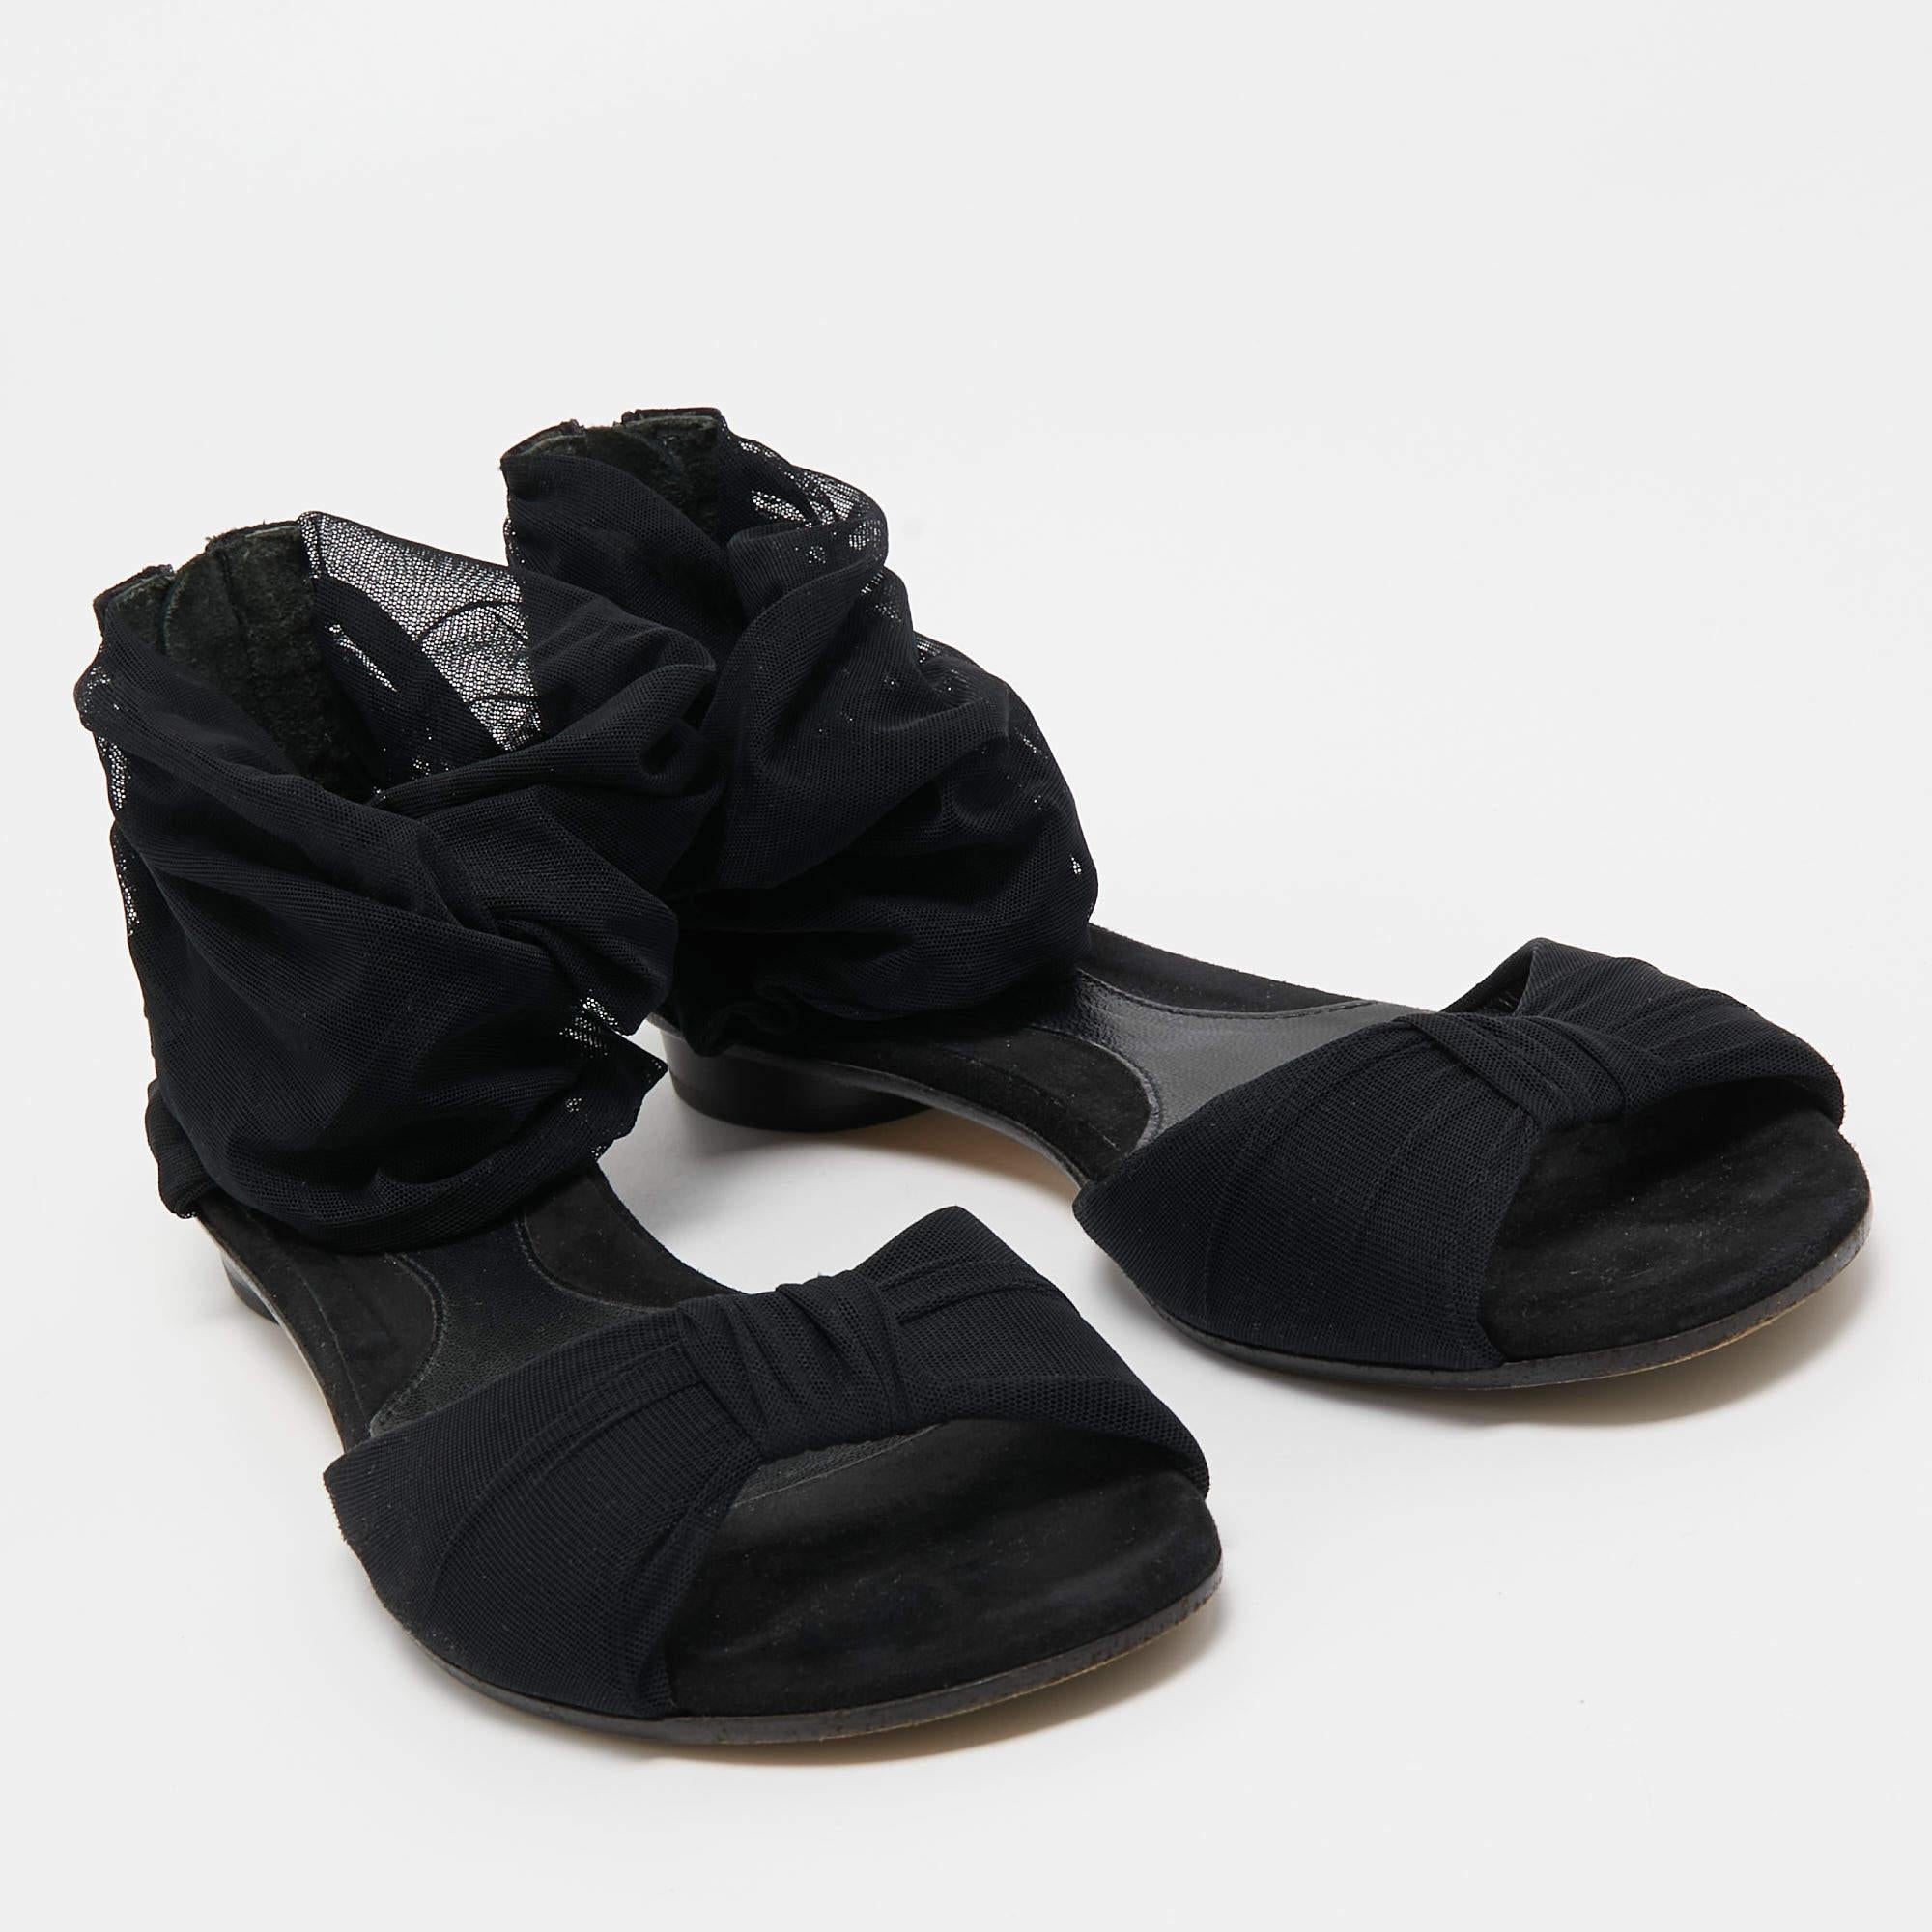 Fendi Black Fabric and Suede Bow Open Toe Flat Sandals Size 37 In Good Condition For Sale In Dubai, Al Qouz 2